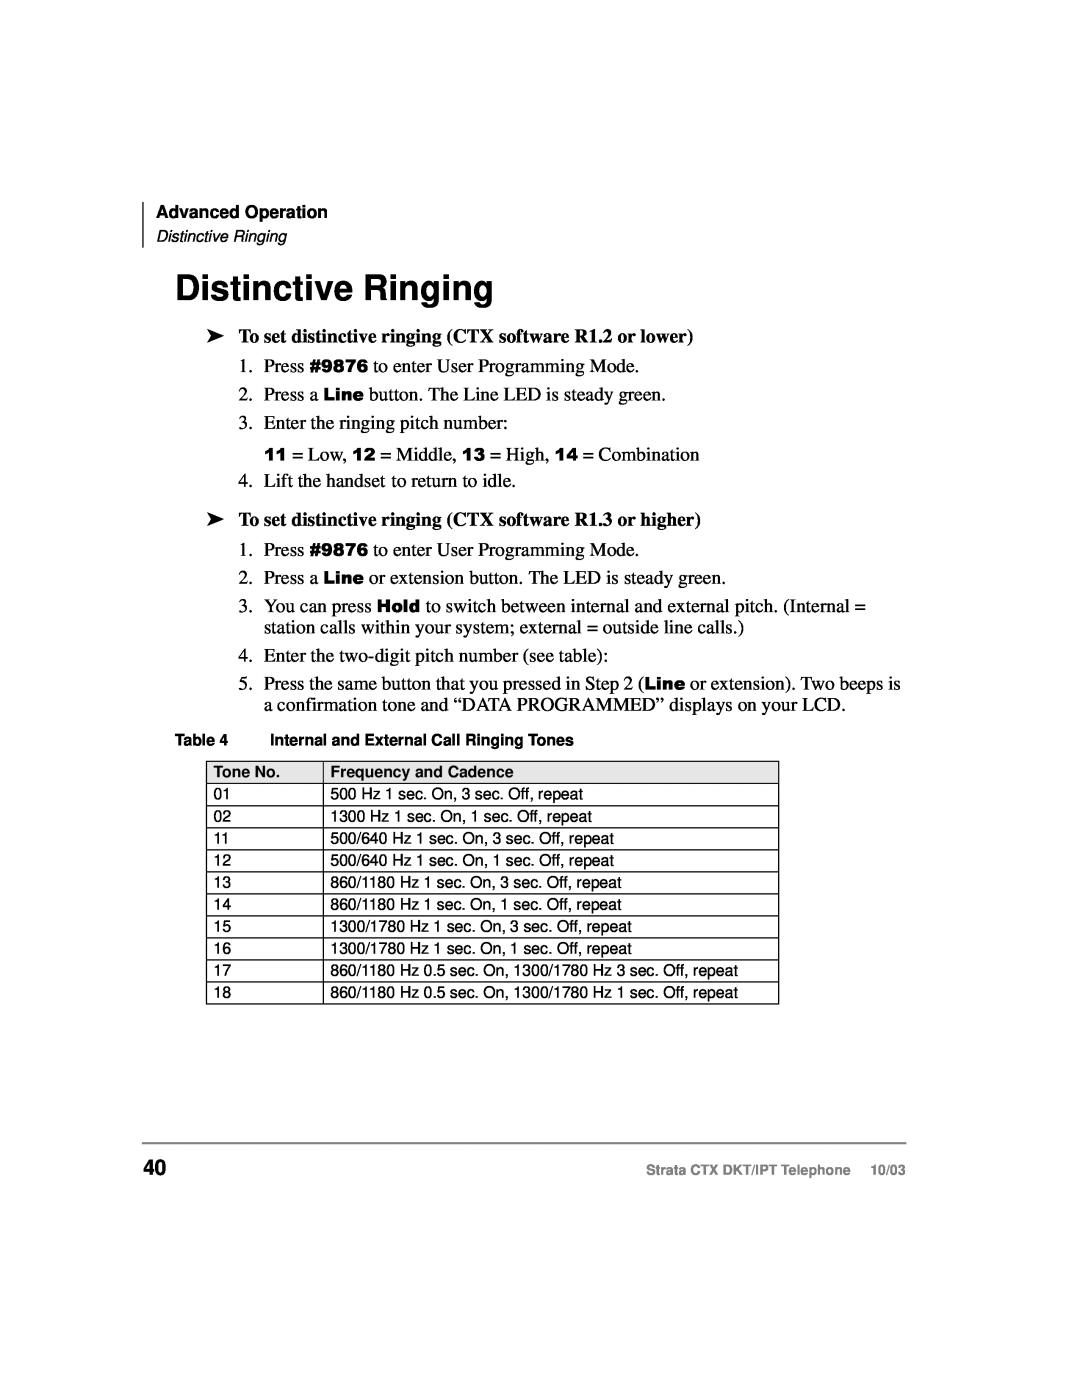 Toshiba IPT, DKT manual Distinctive Ringing, To set distinctive ringing CTX software R1.2 or lower 